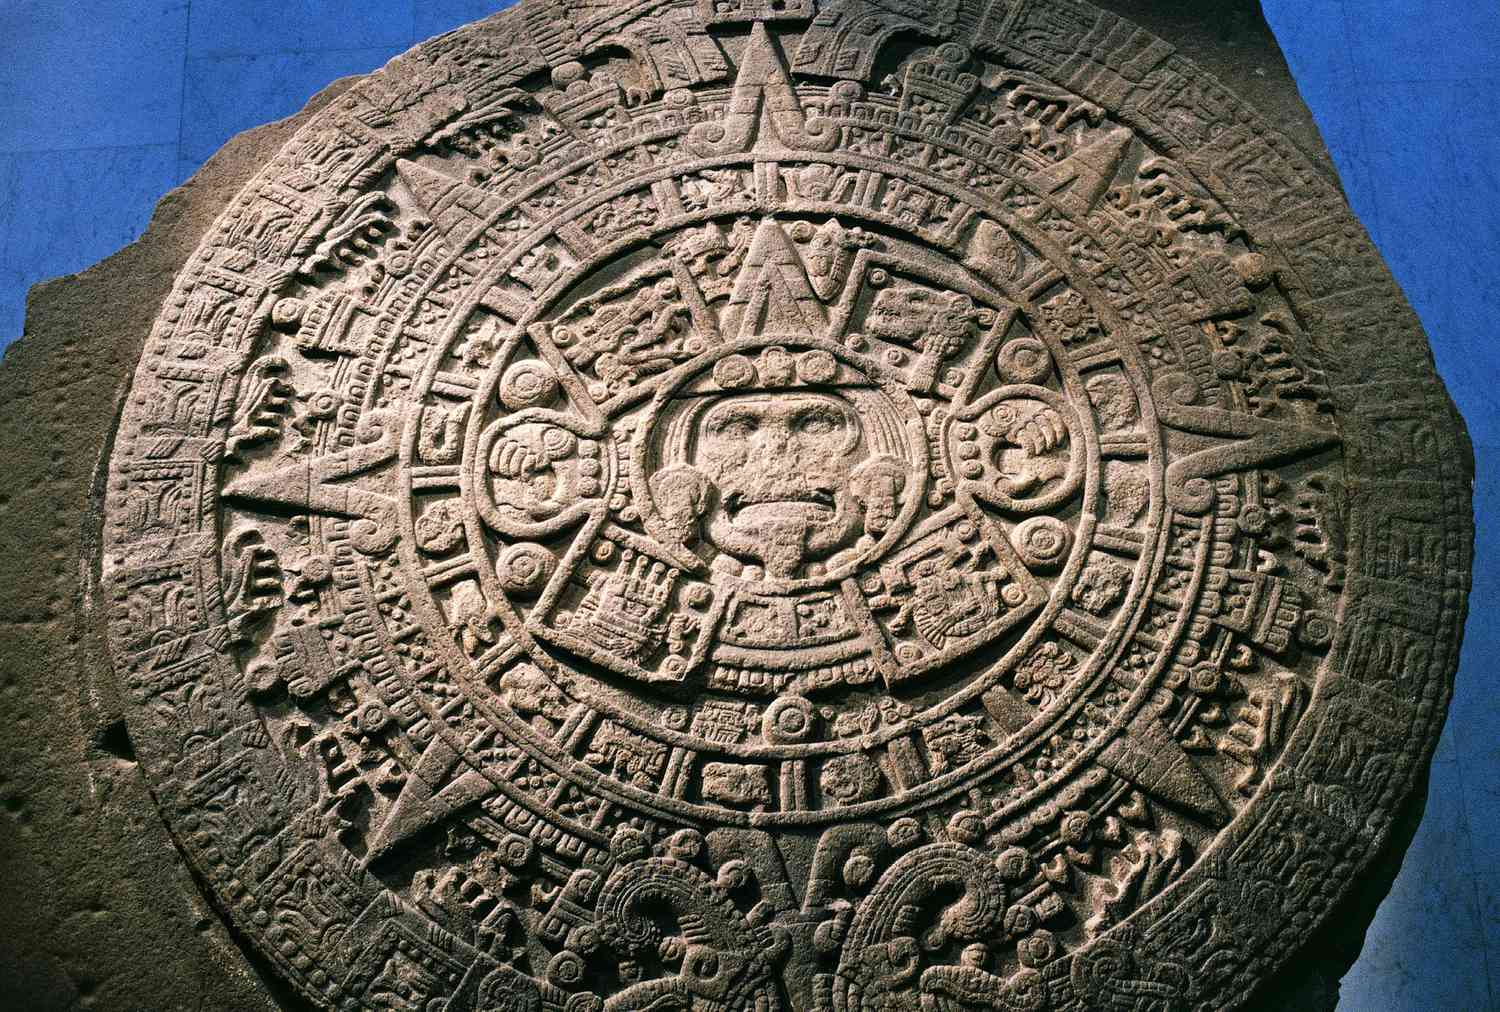 35-best-facts-about-the-aztec-calendar